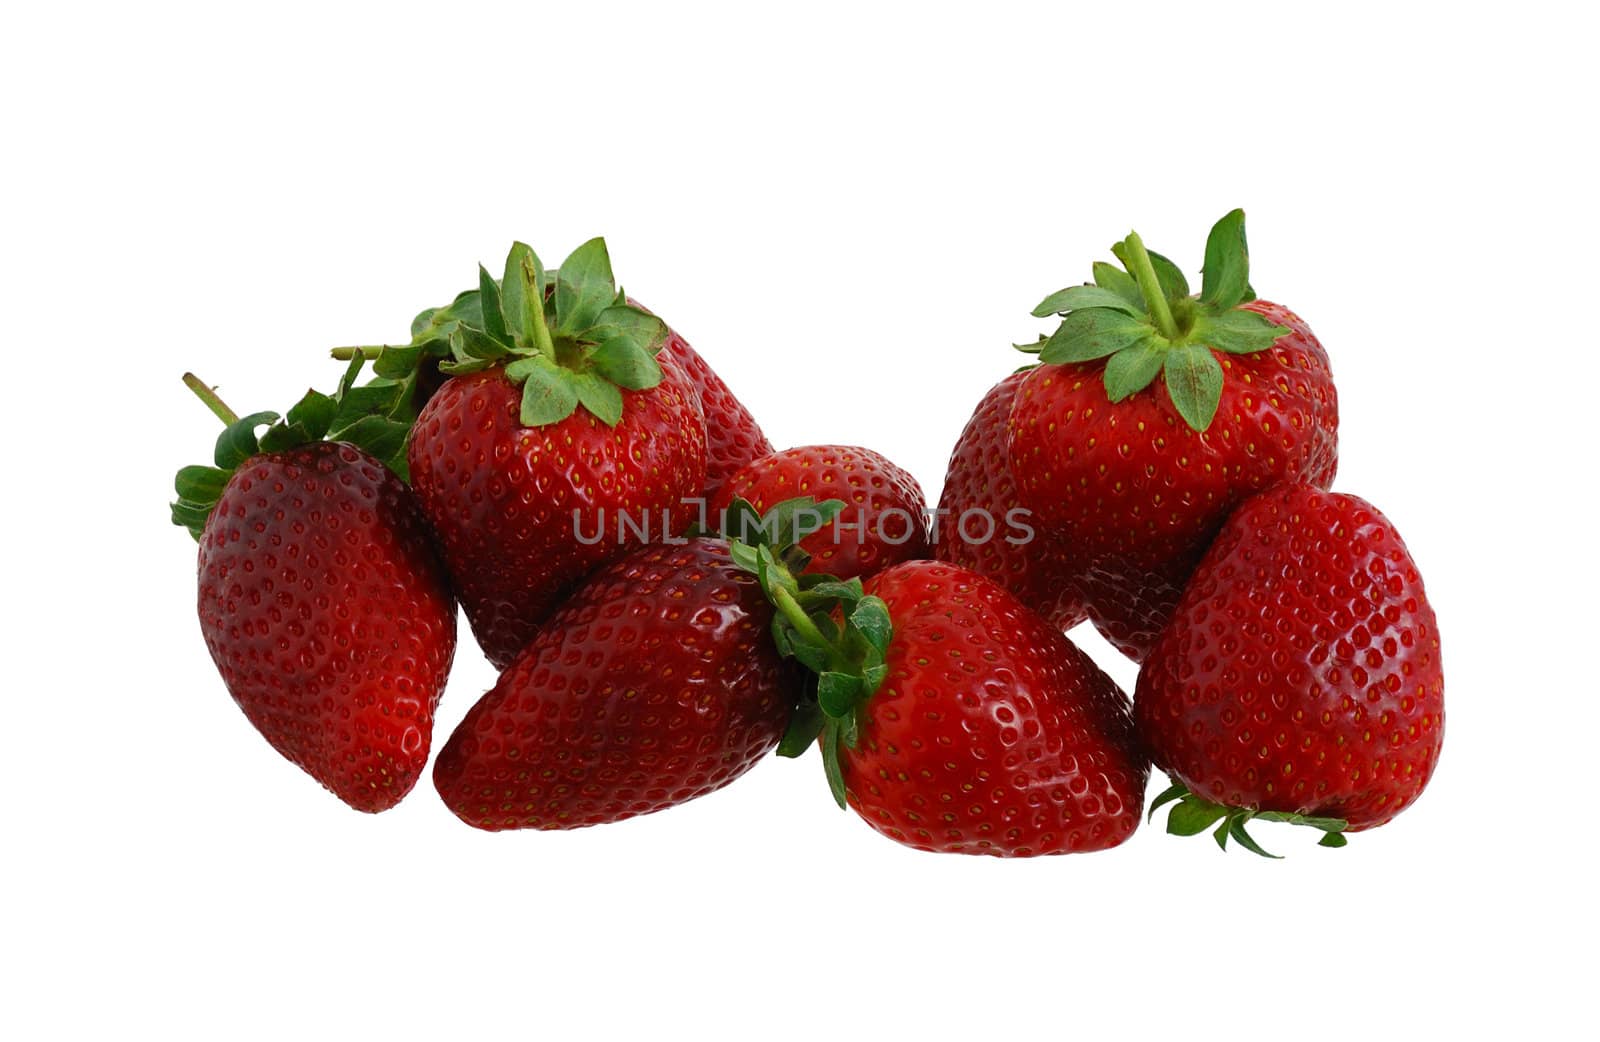 Pile of fresh strawberries by vadidak